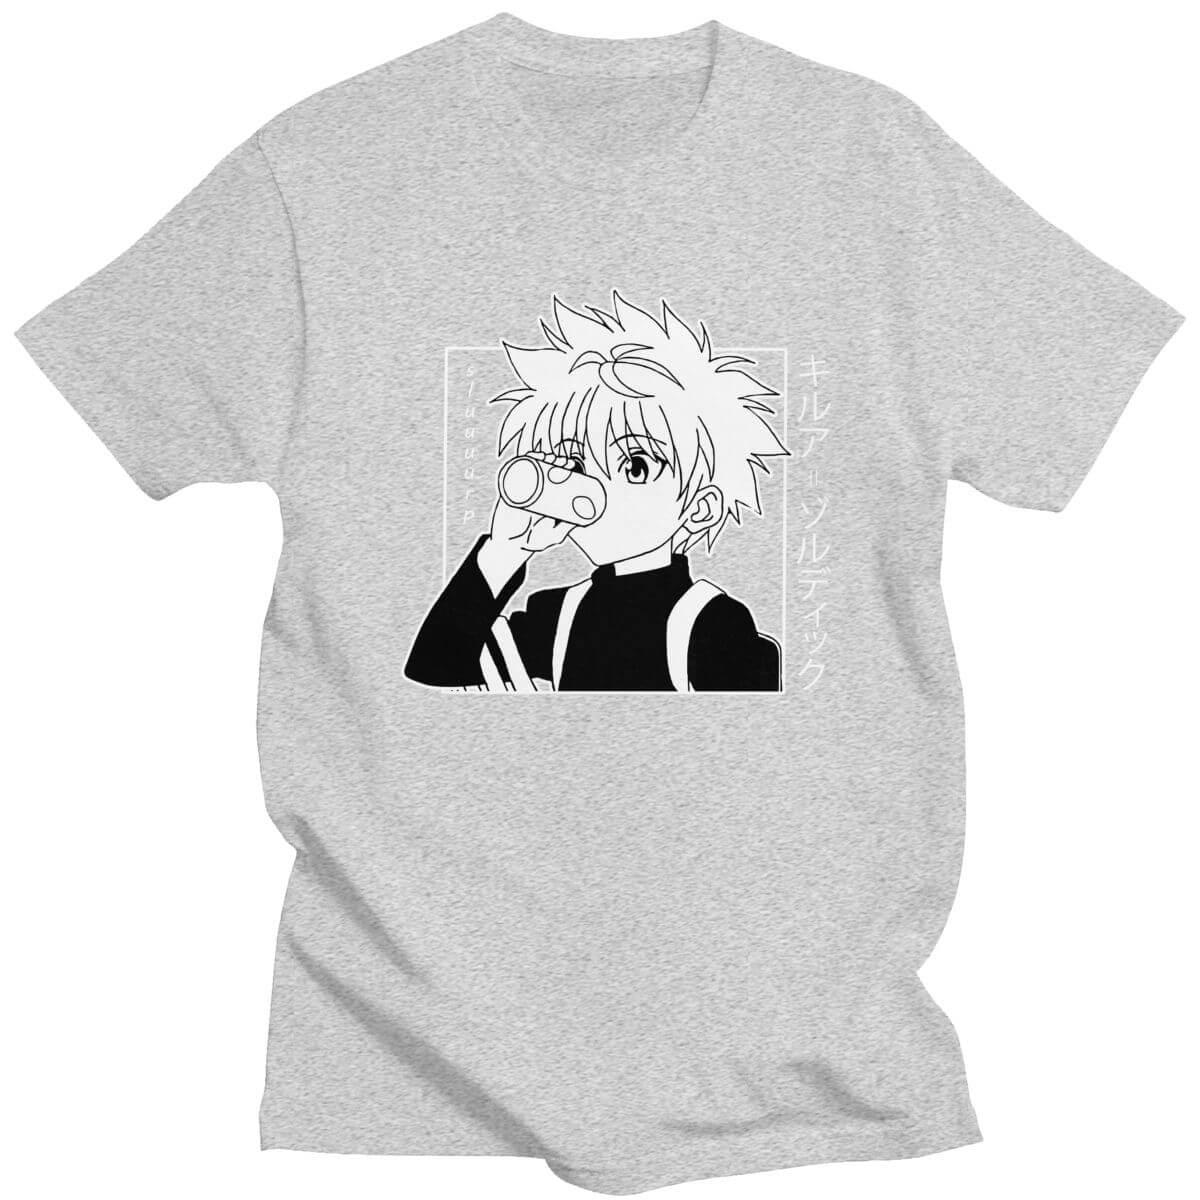 Kawaii Hunter X Hunter Tshirt Men Short Sleeve Killua Zoldyck T-shirt Crew Neck Fitted Soft Cotton Anime Manga Tee Shirt Clothes